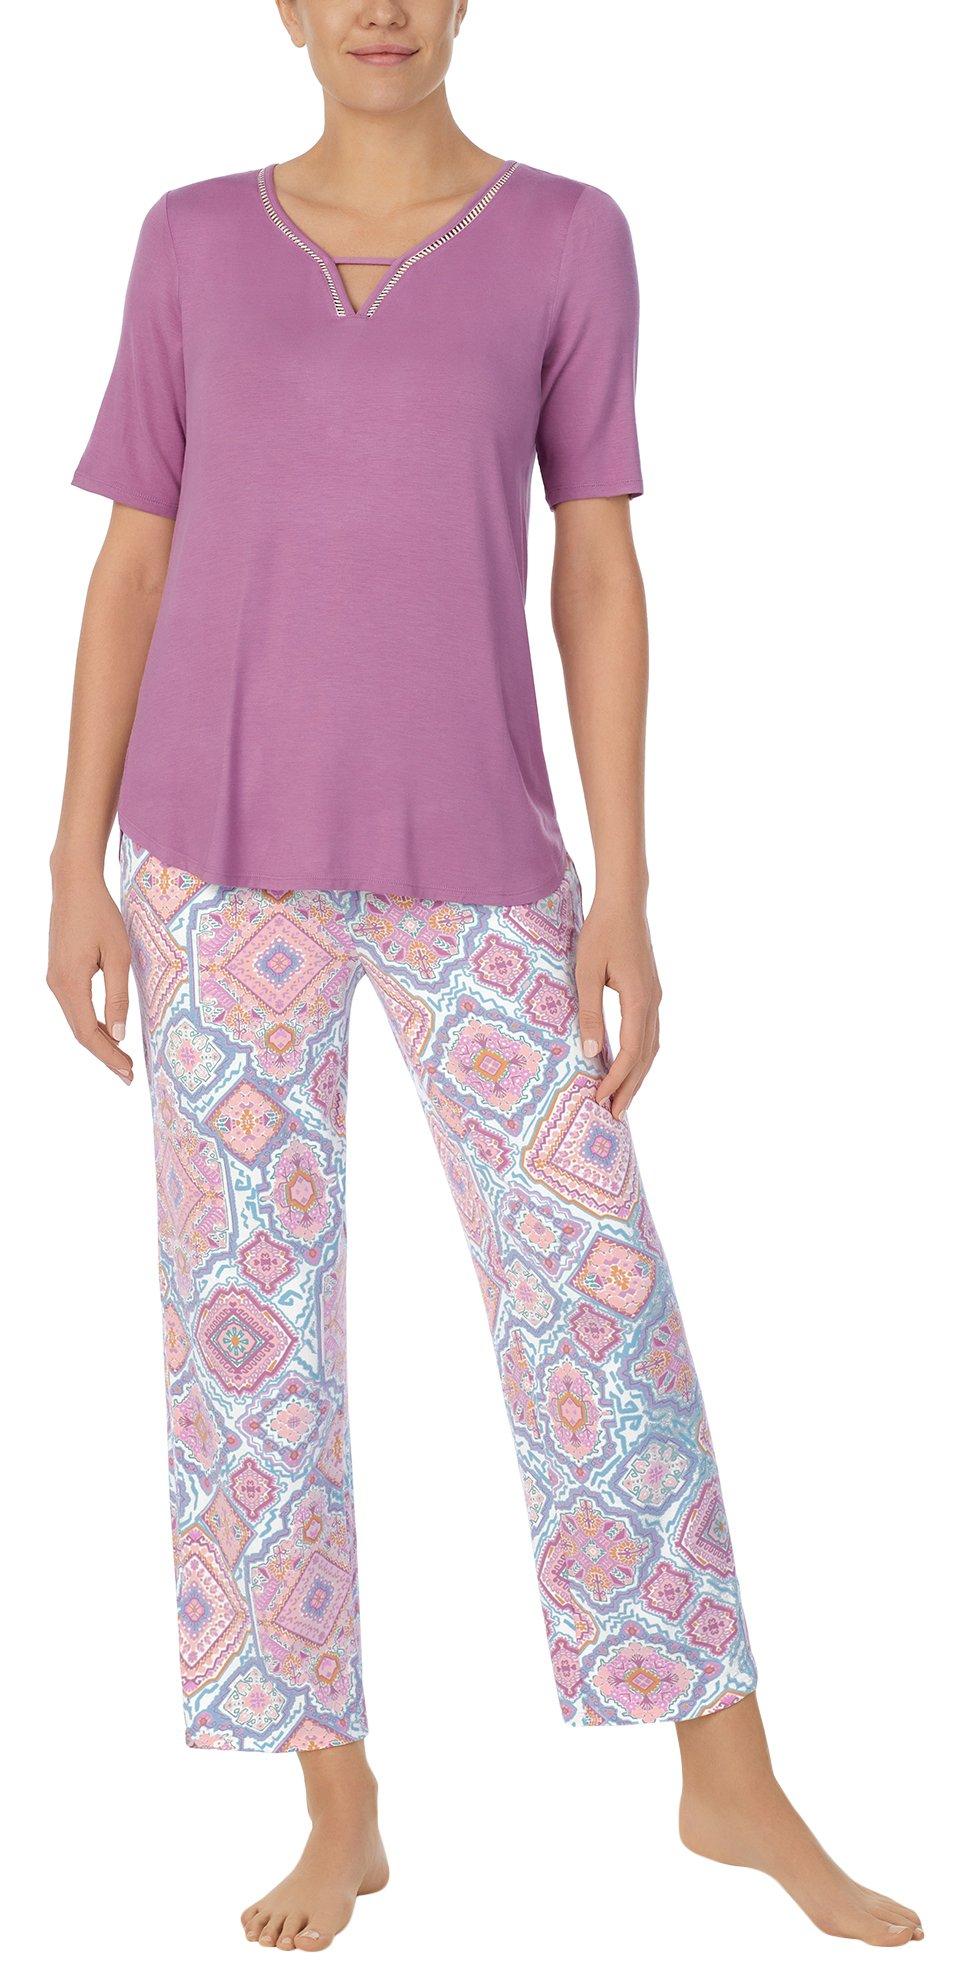 Ellen Tracy Womens 2-Pc. Solid Top & Print Pants Sleep Set